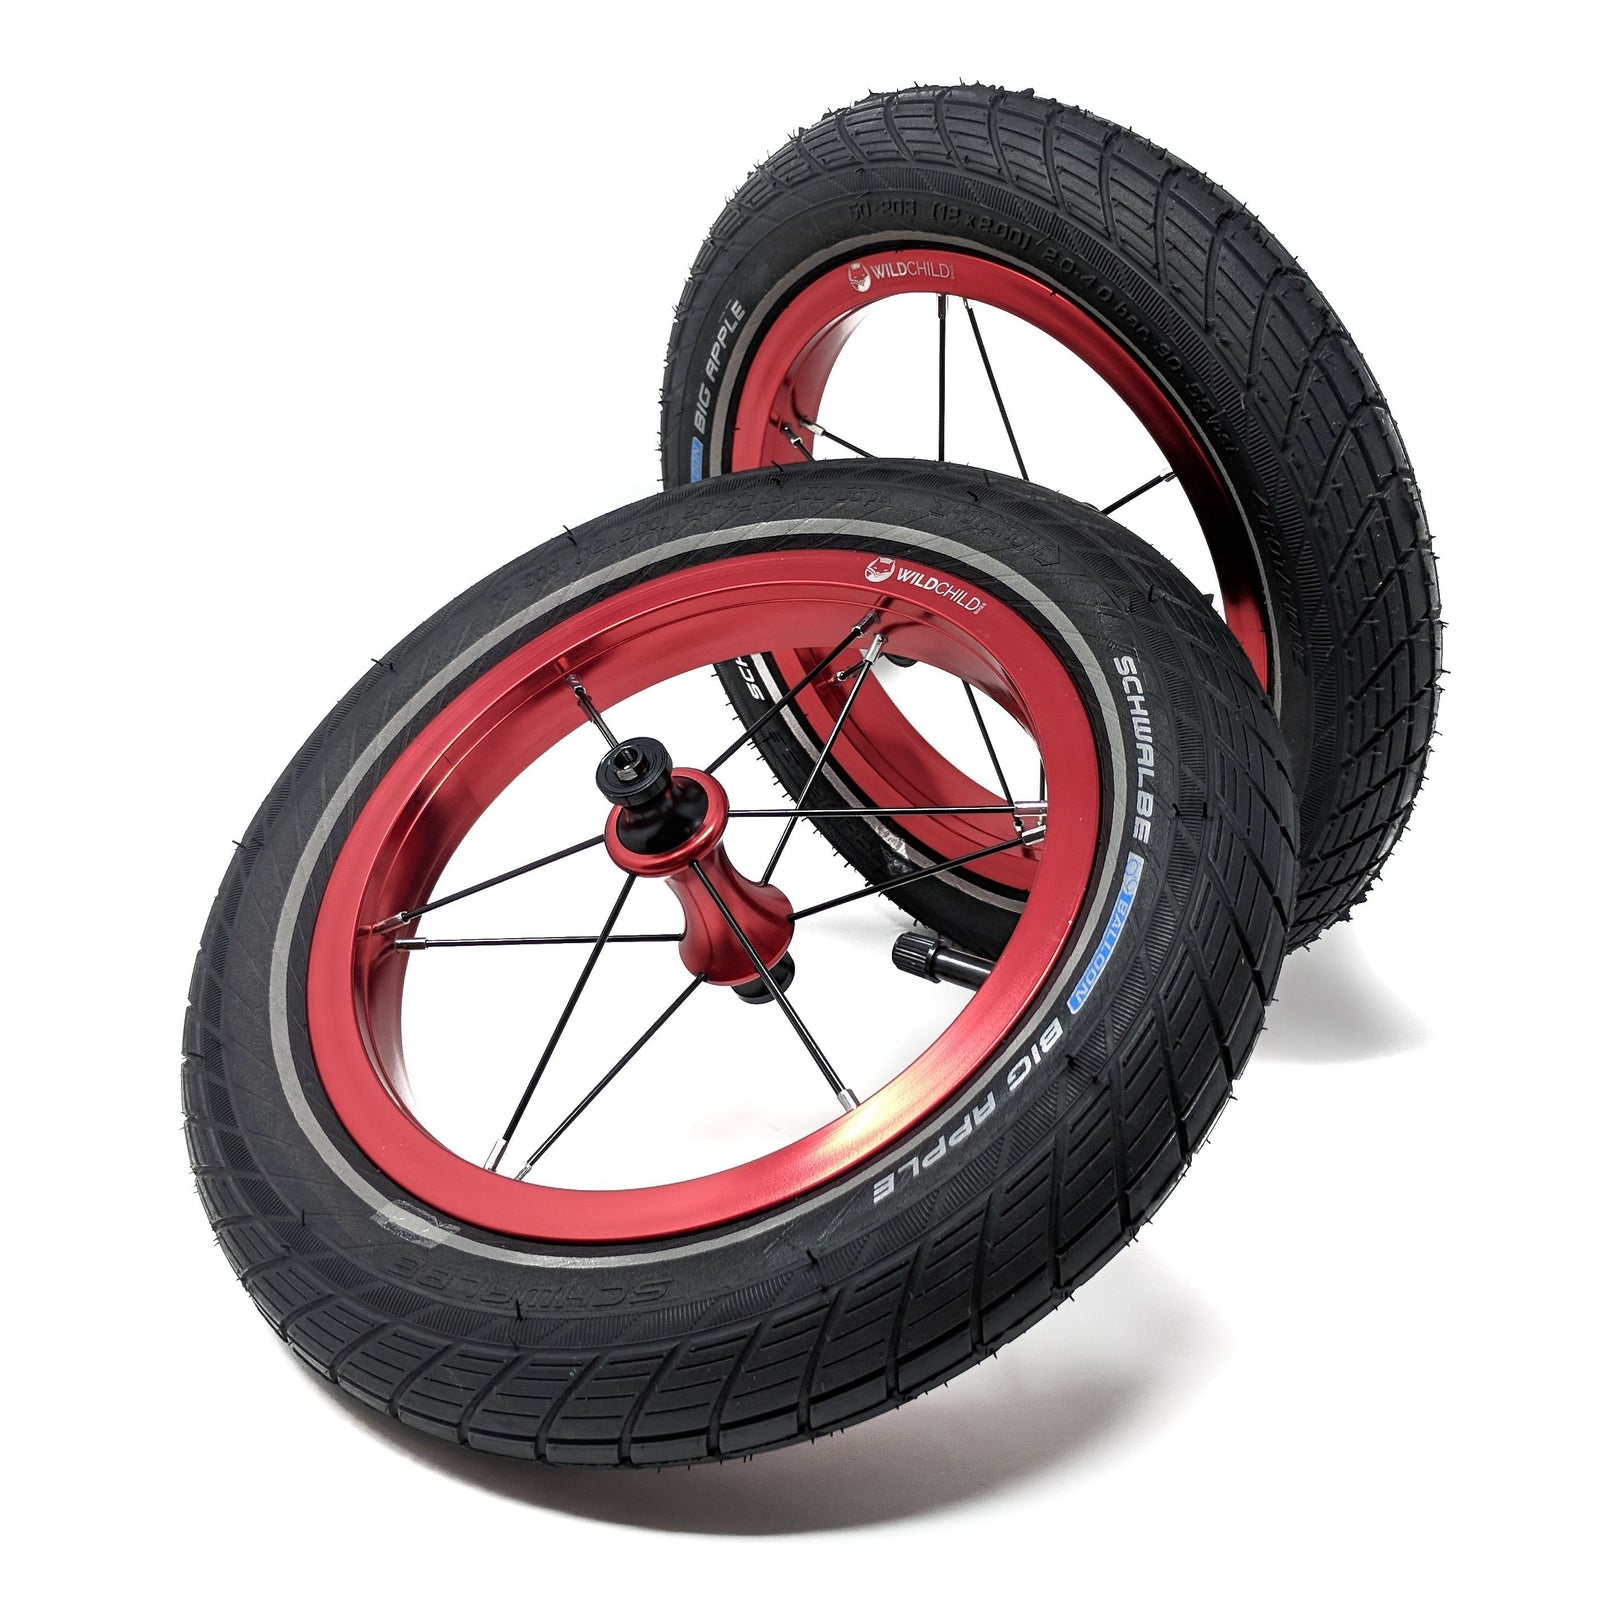 12 bicycle wheel